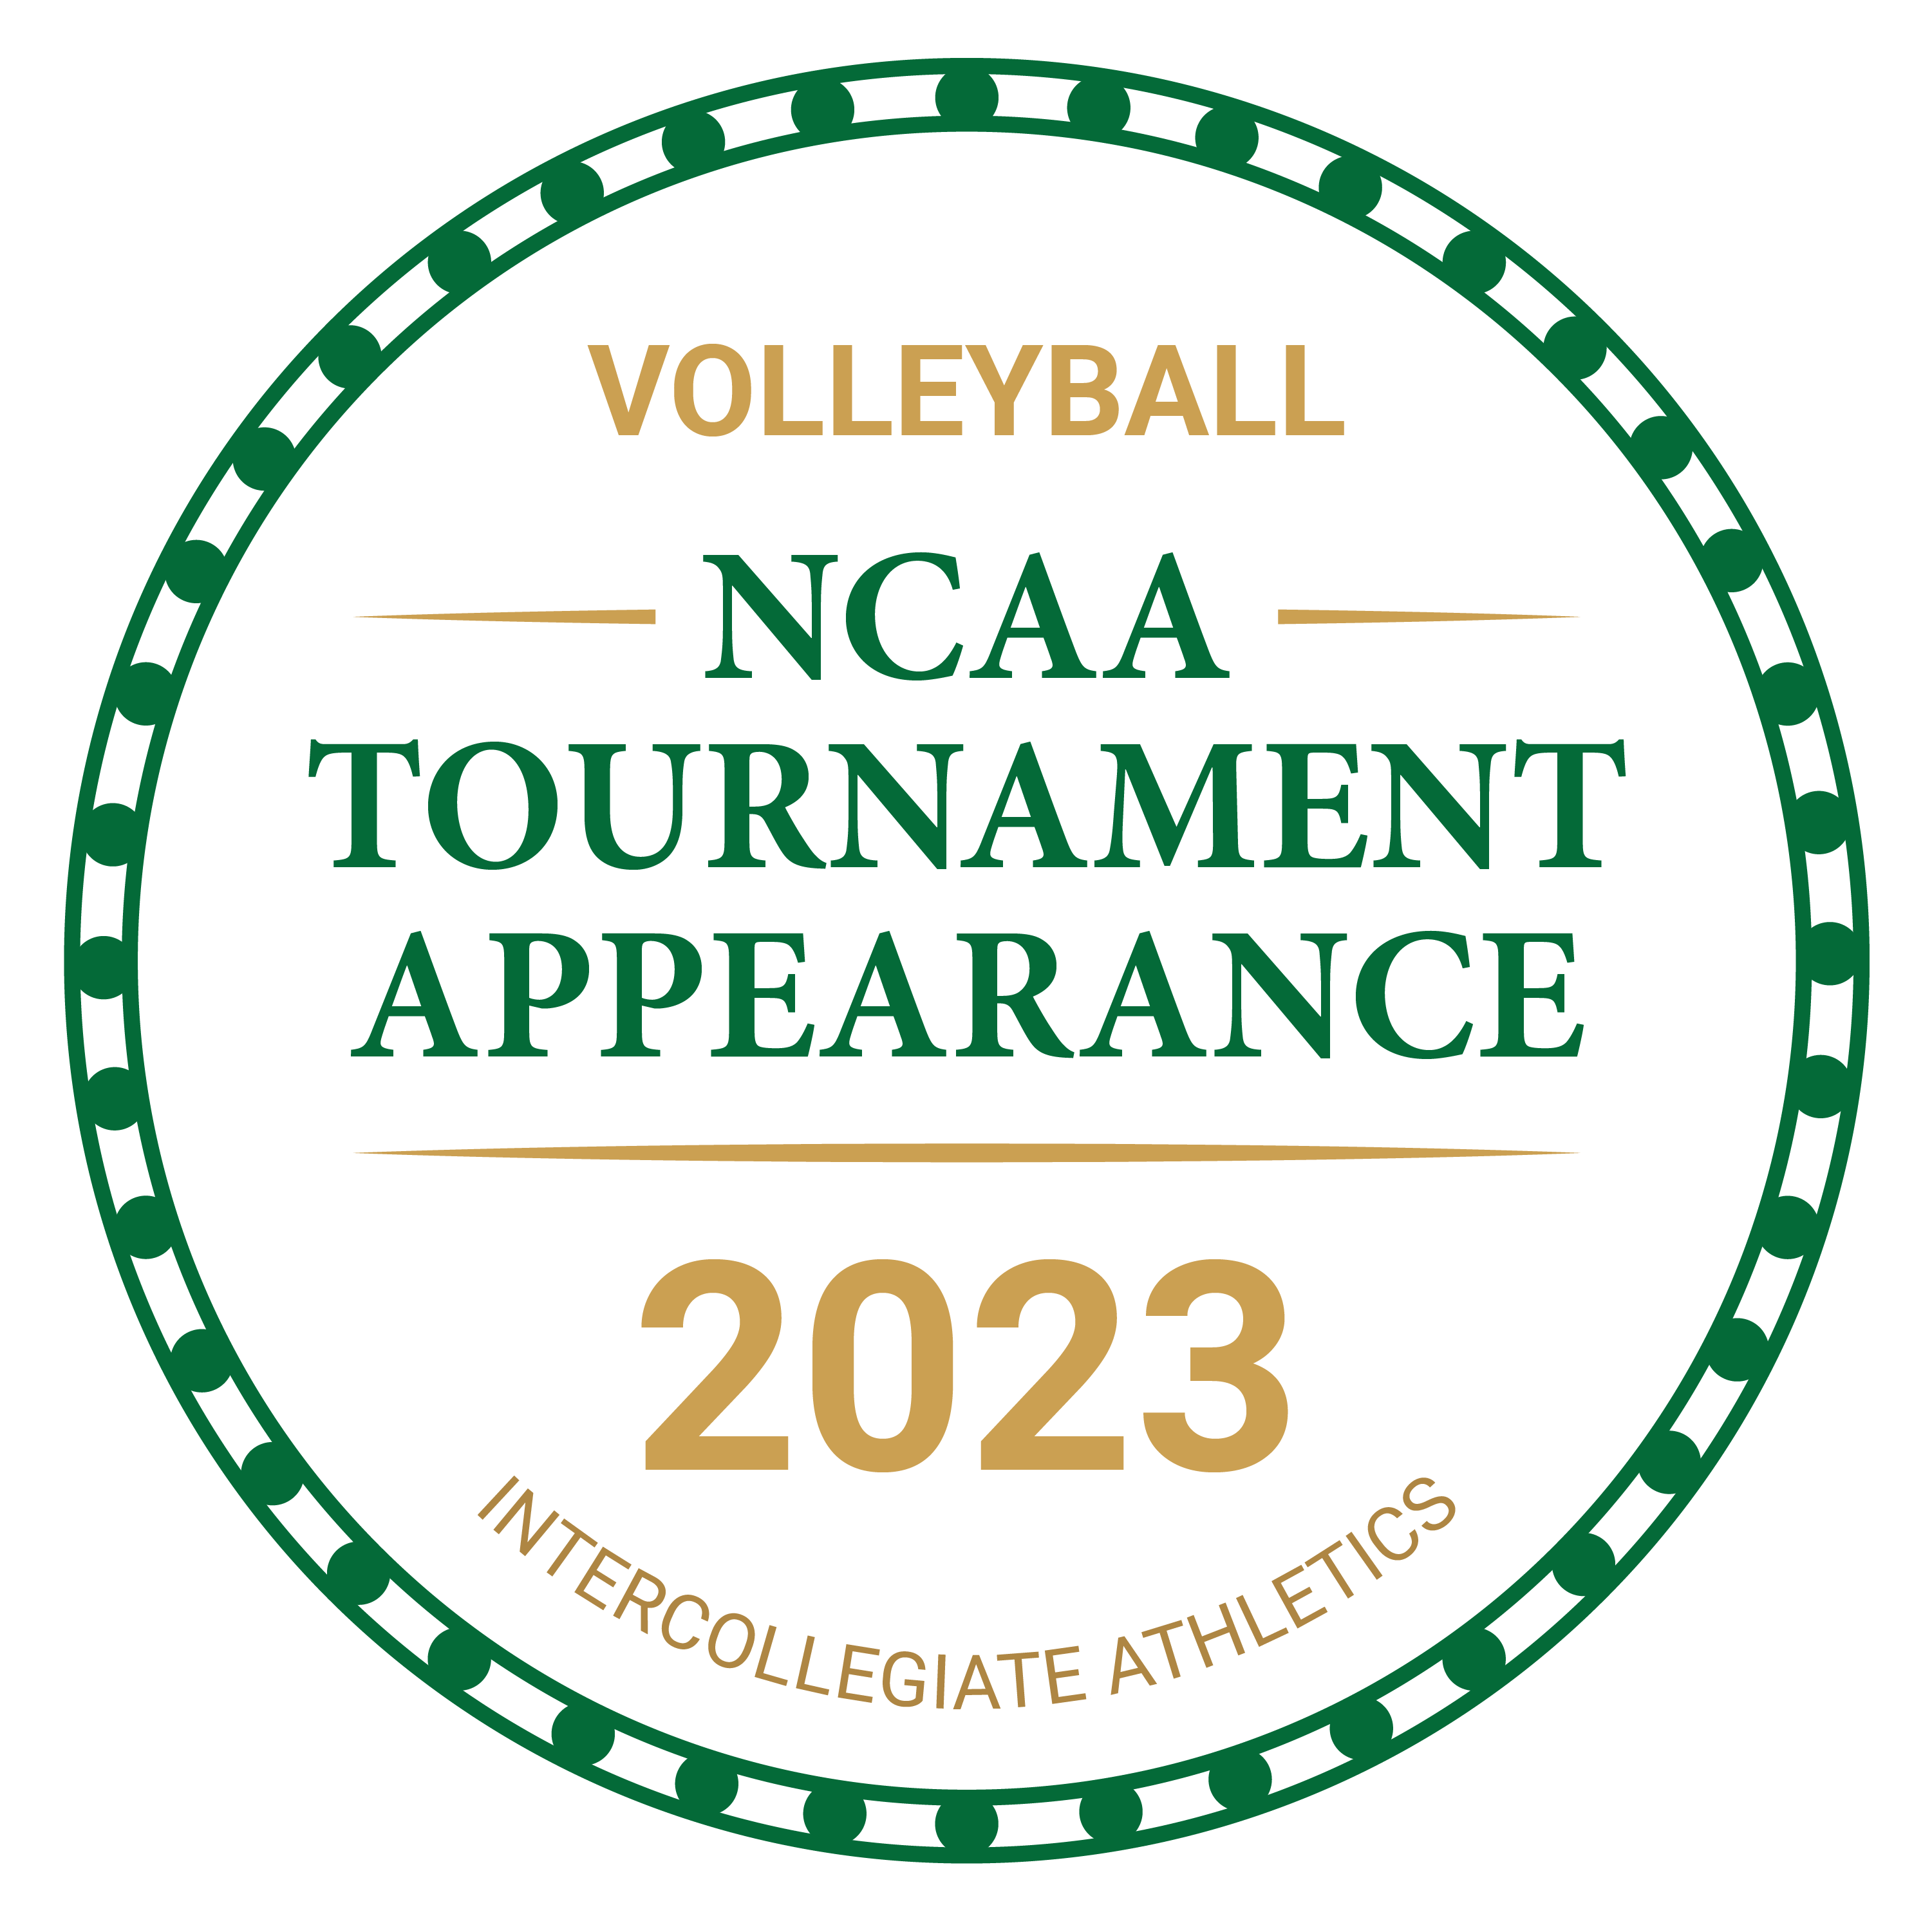 2022 Intercollegiate Athletics NCAA Tournament Appearance Volleyball